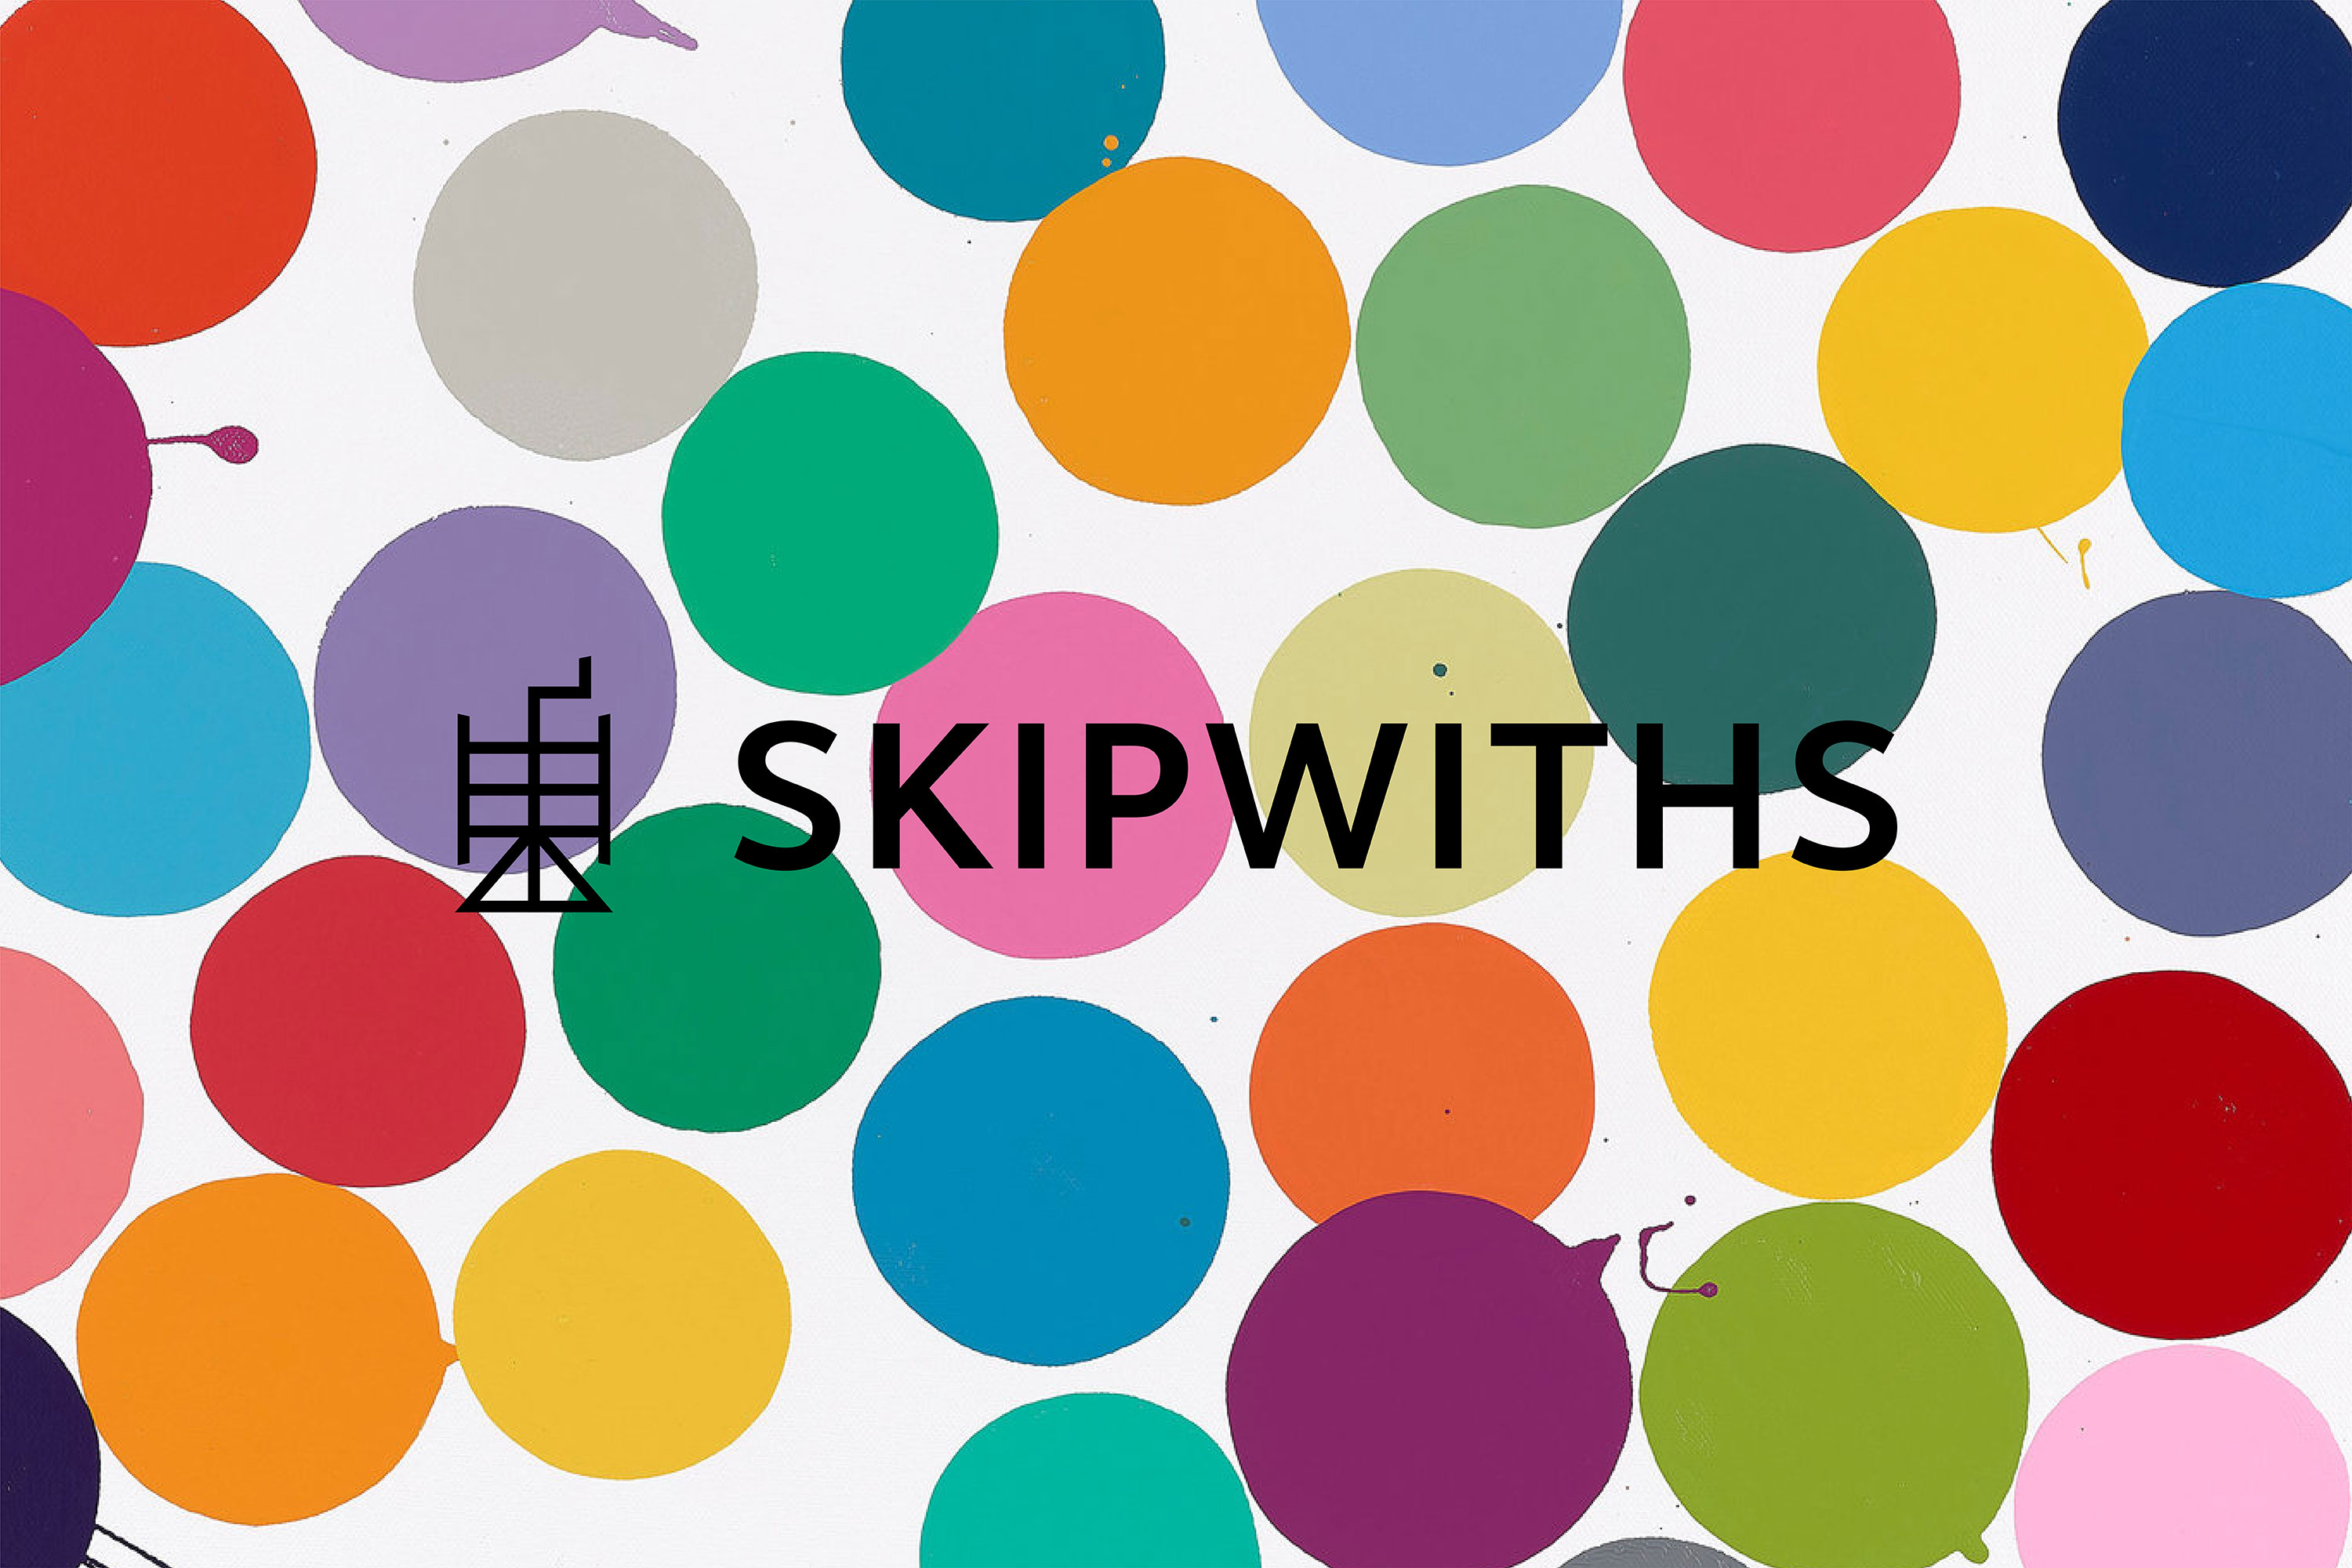 Skipwiths | Elsa Benoldi Graphic Design